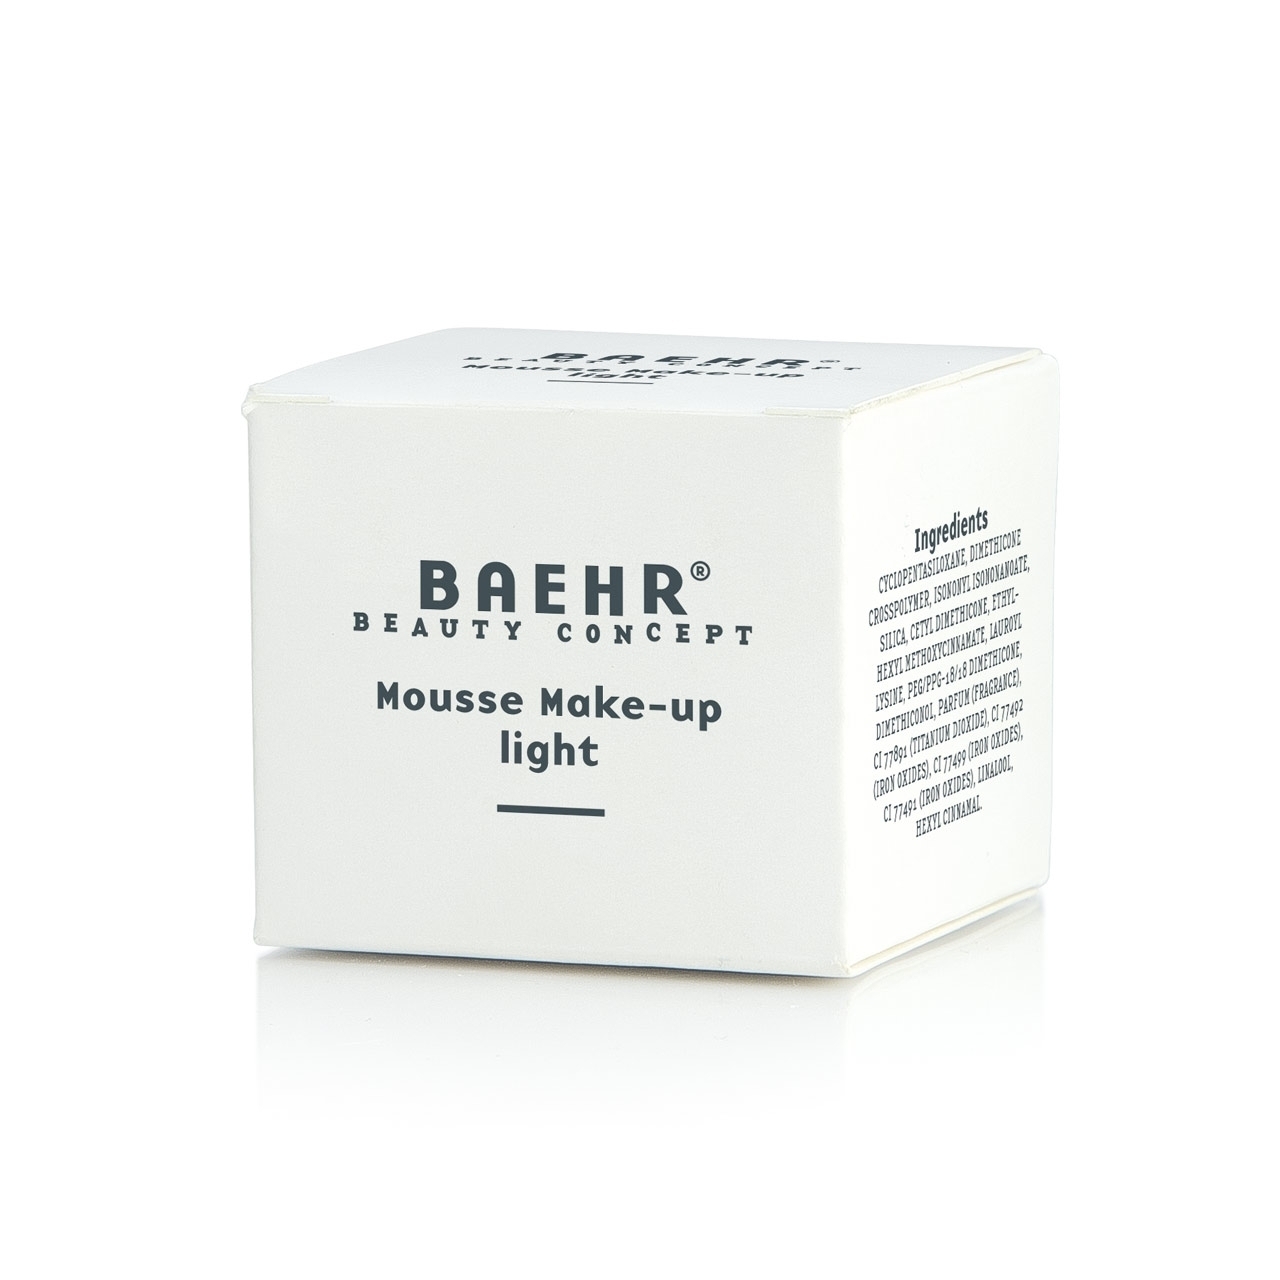 BAEHR BEAUTY CONCEPT - Mousse Make-up light, 15 ml